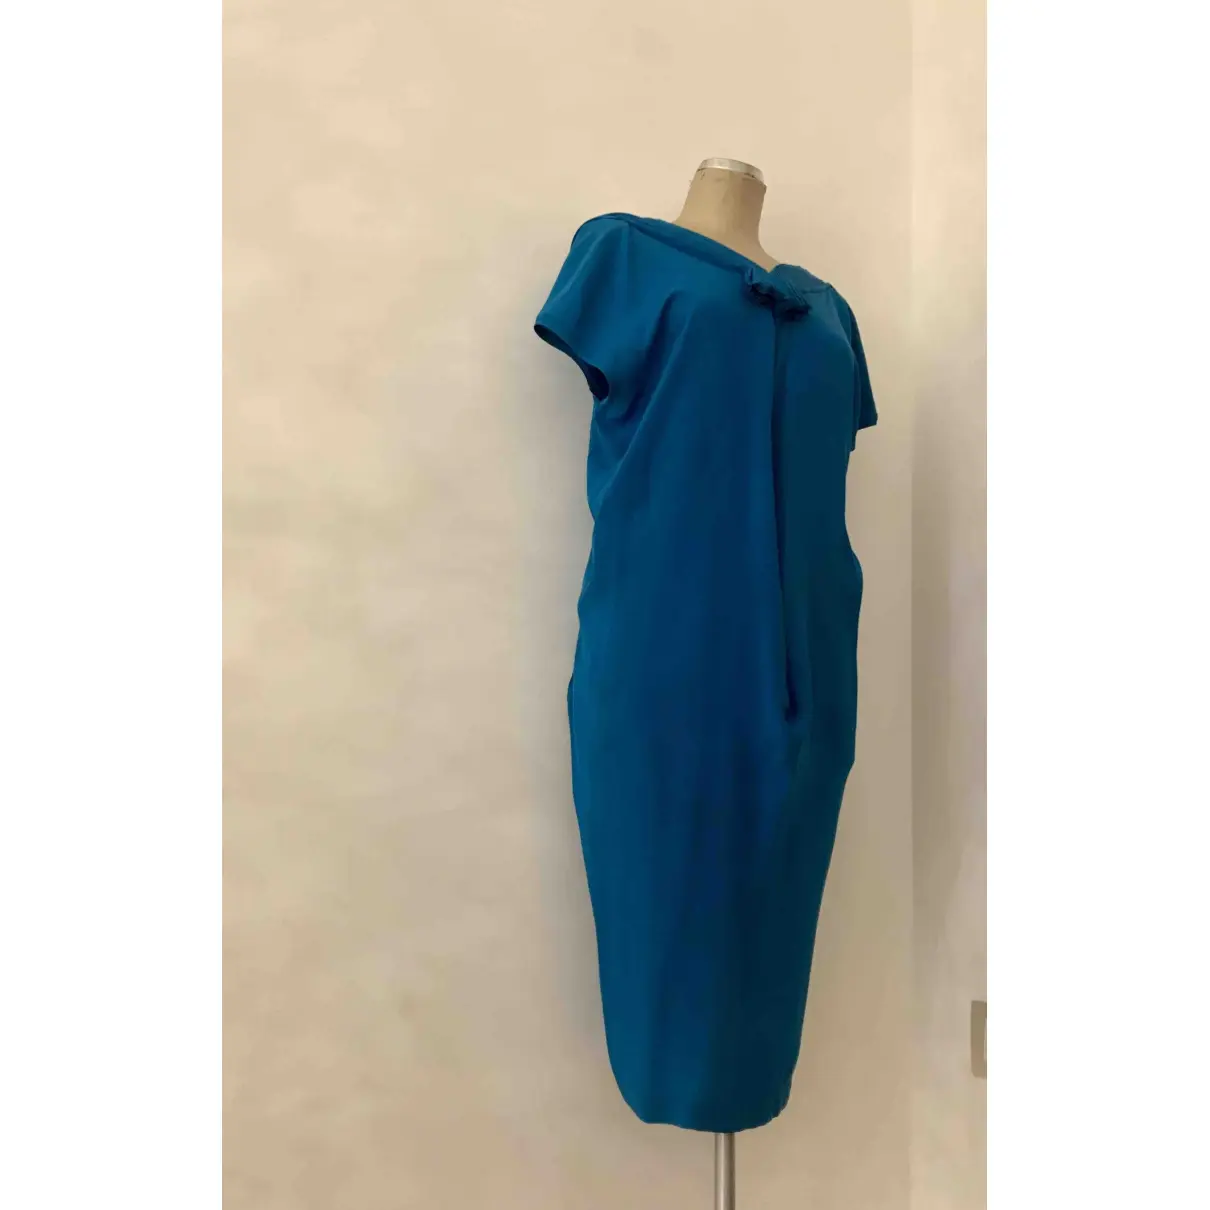 Sophia Kokosalaki Silk mid-length dress for sale